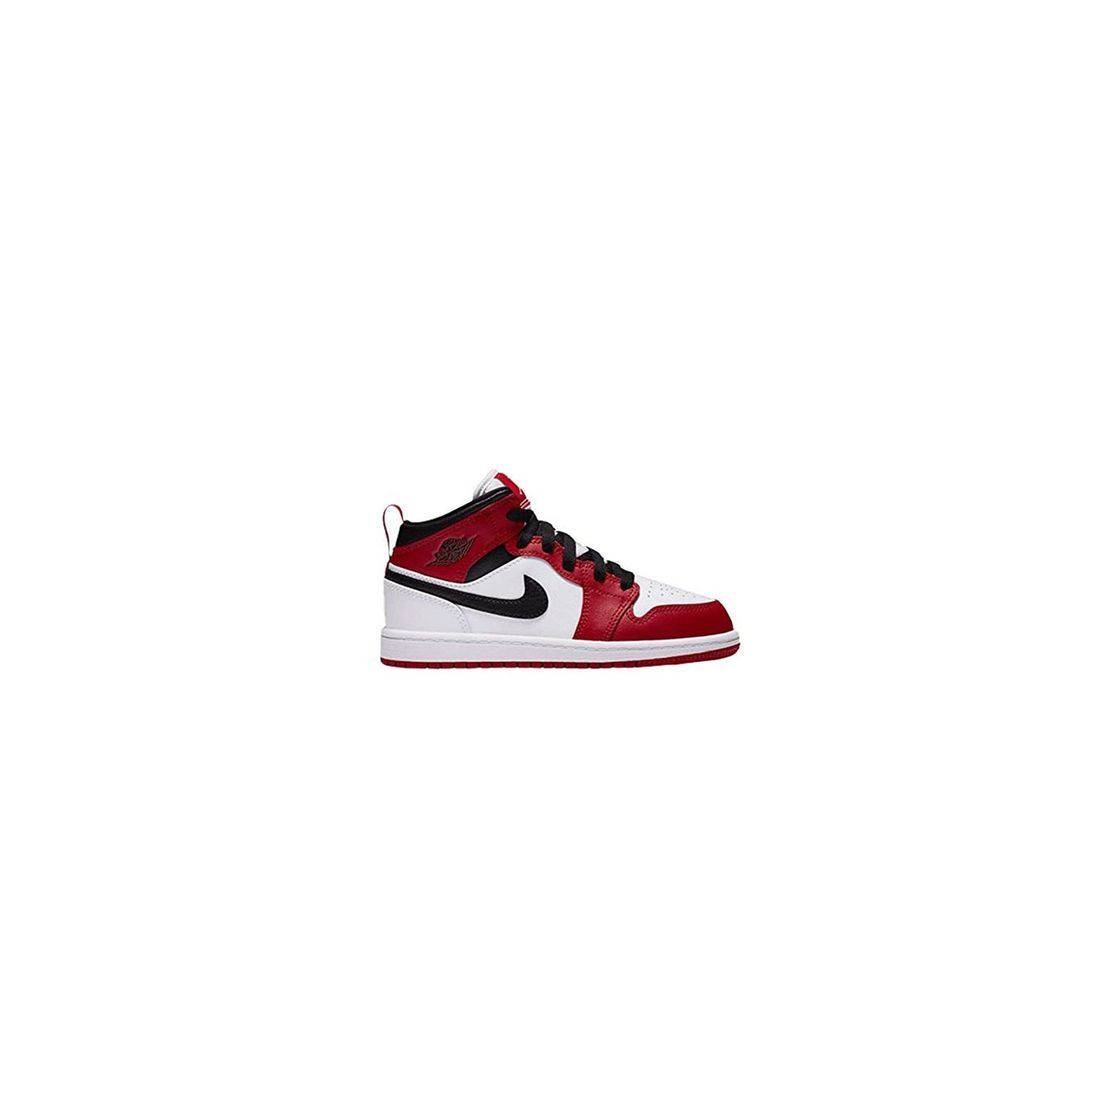 Nike Jordan Zapatos Niños Air Jordan 1 Mid